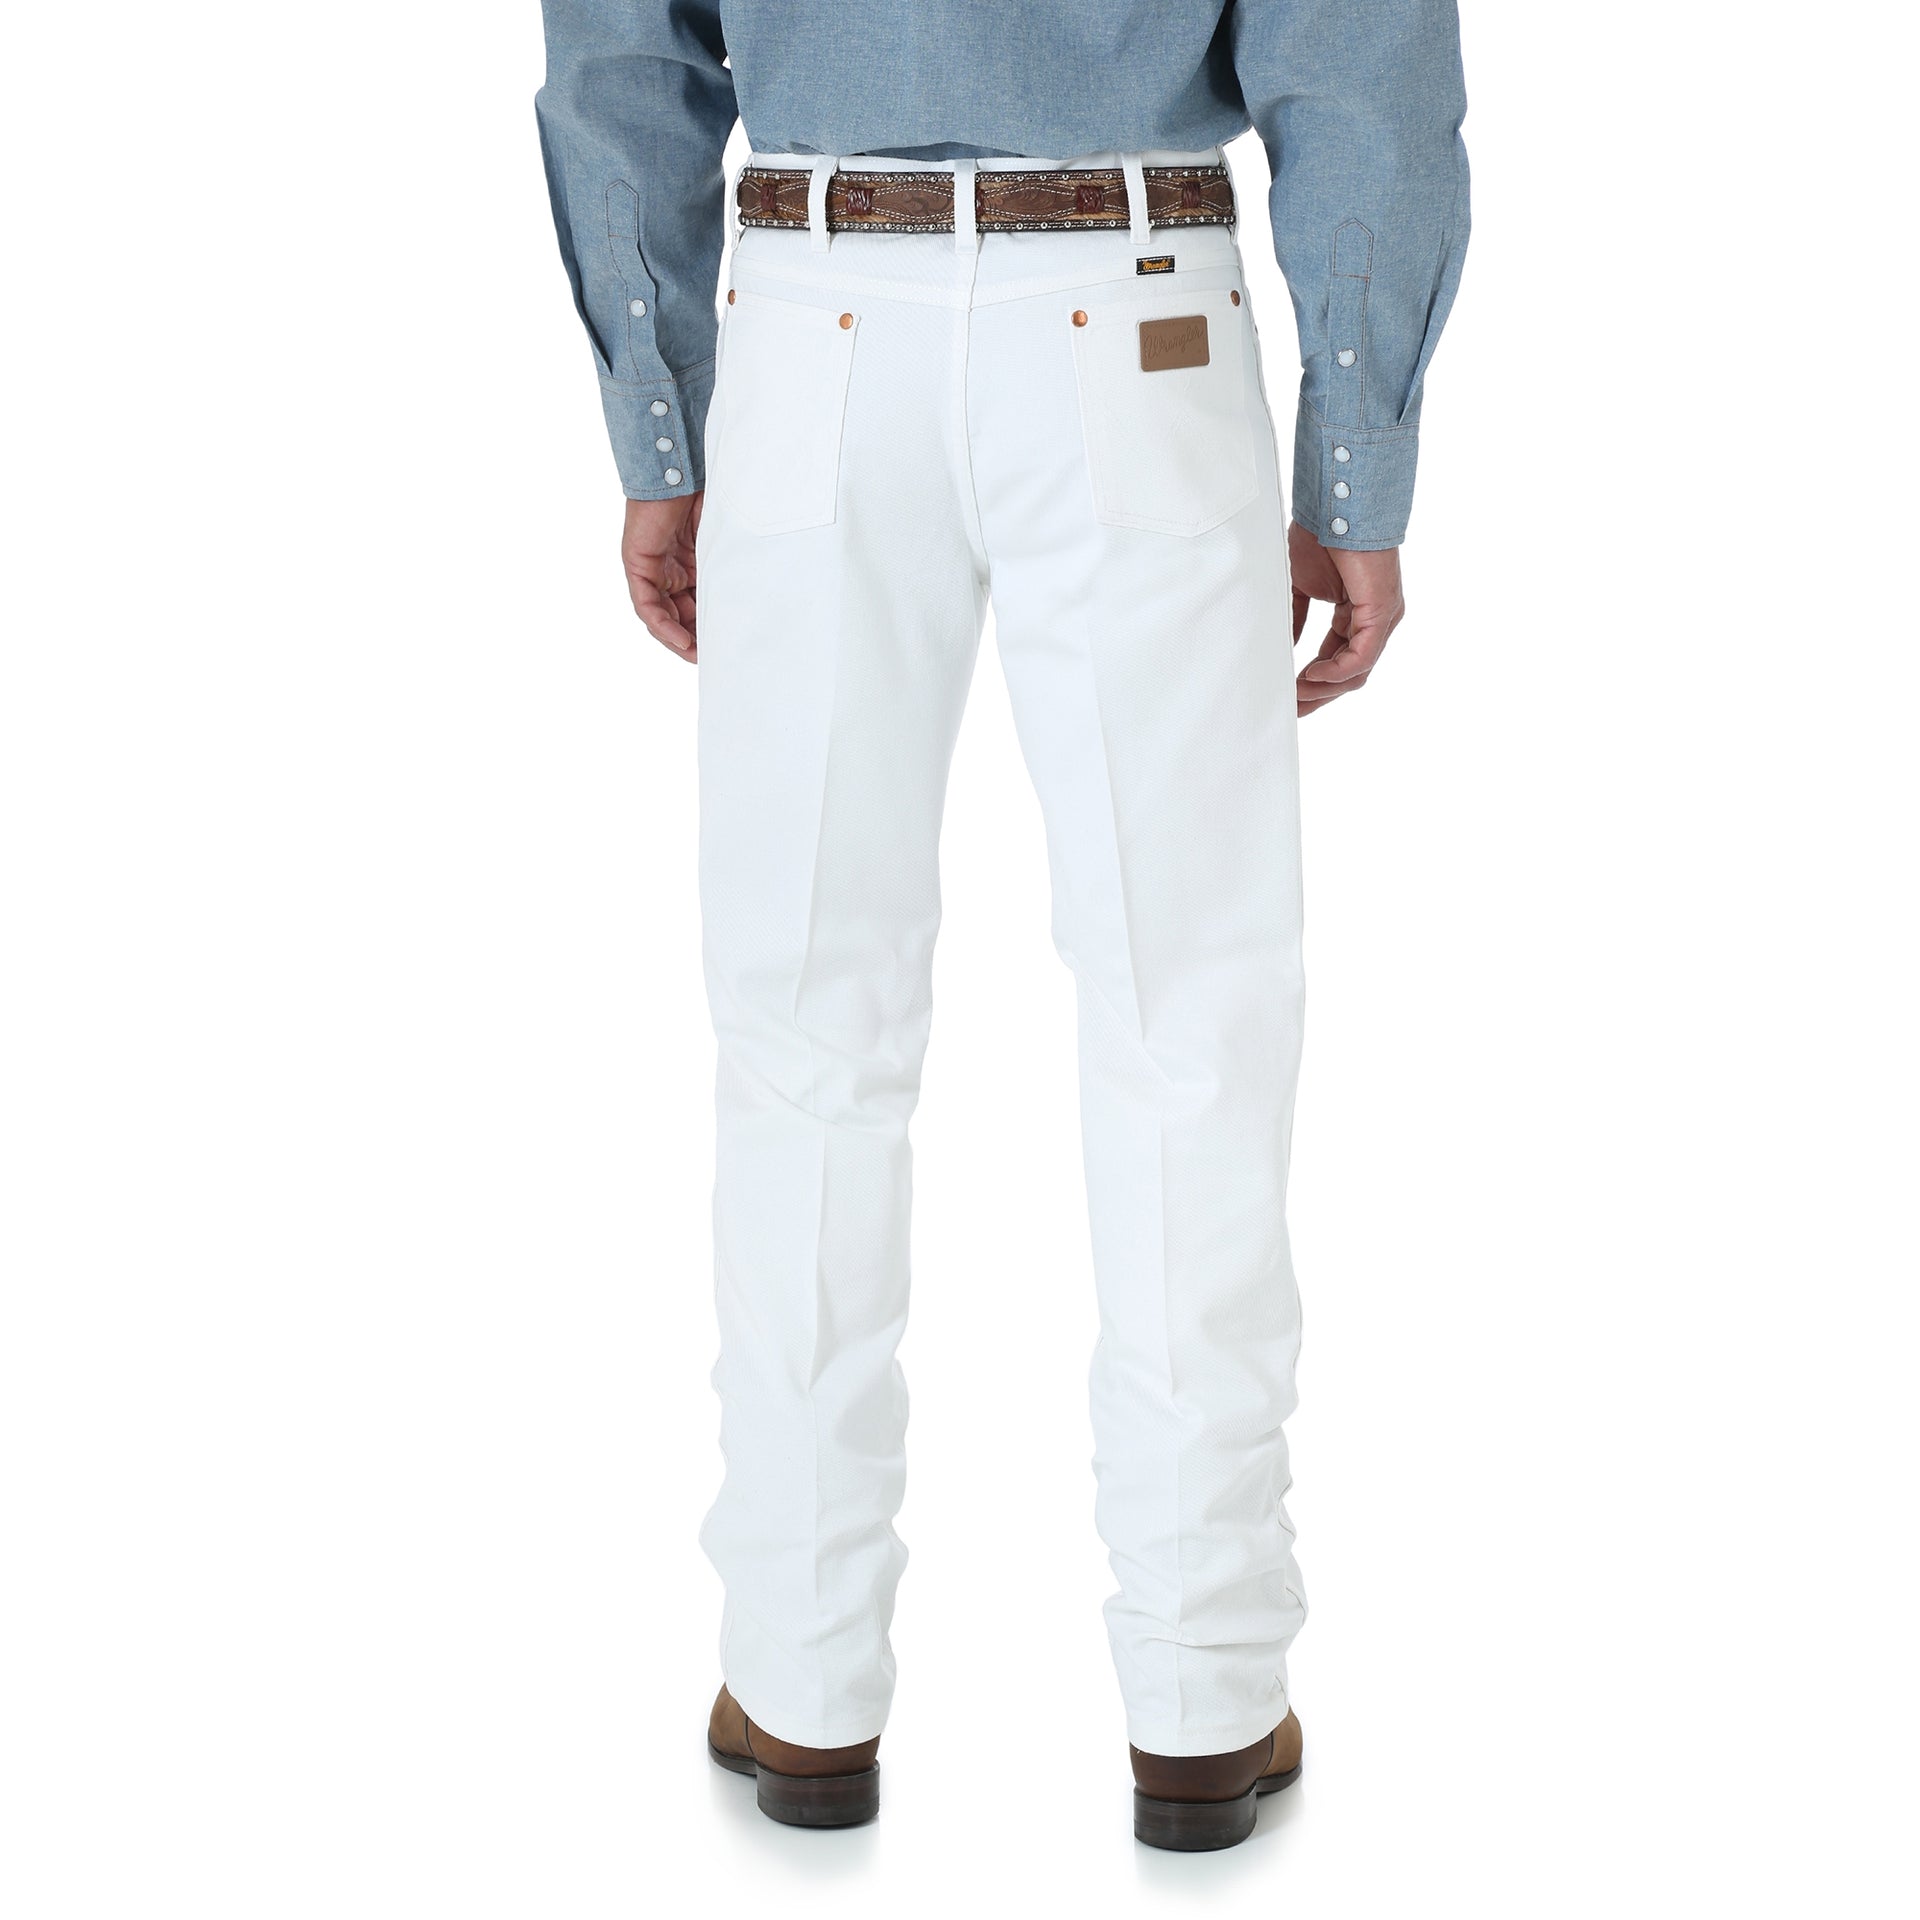 Wrangler Men's Cowboy Cut Slim Fit Jean, Bleached, W35 L30 at